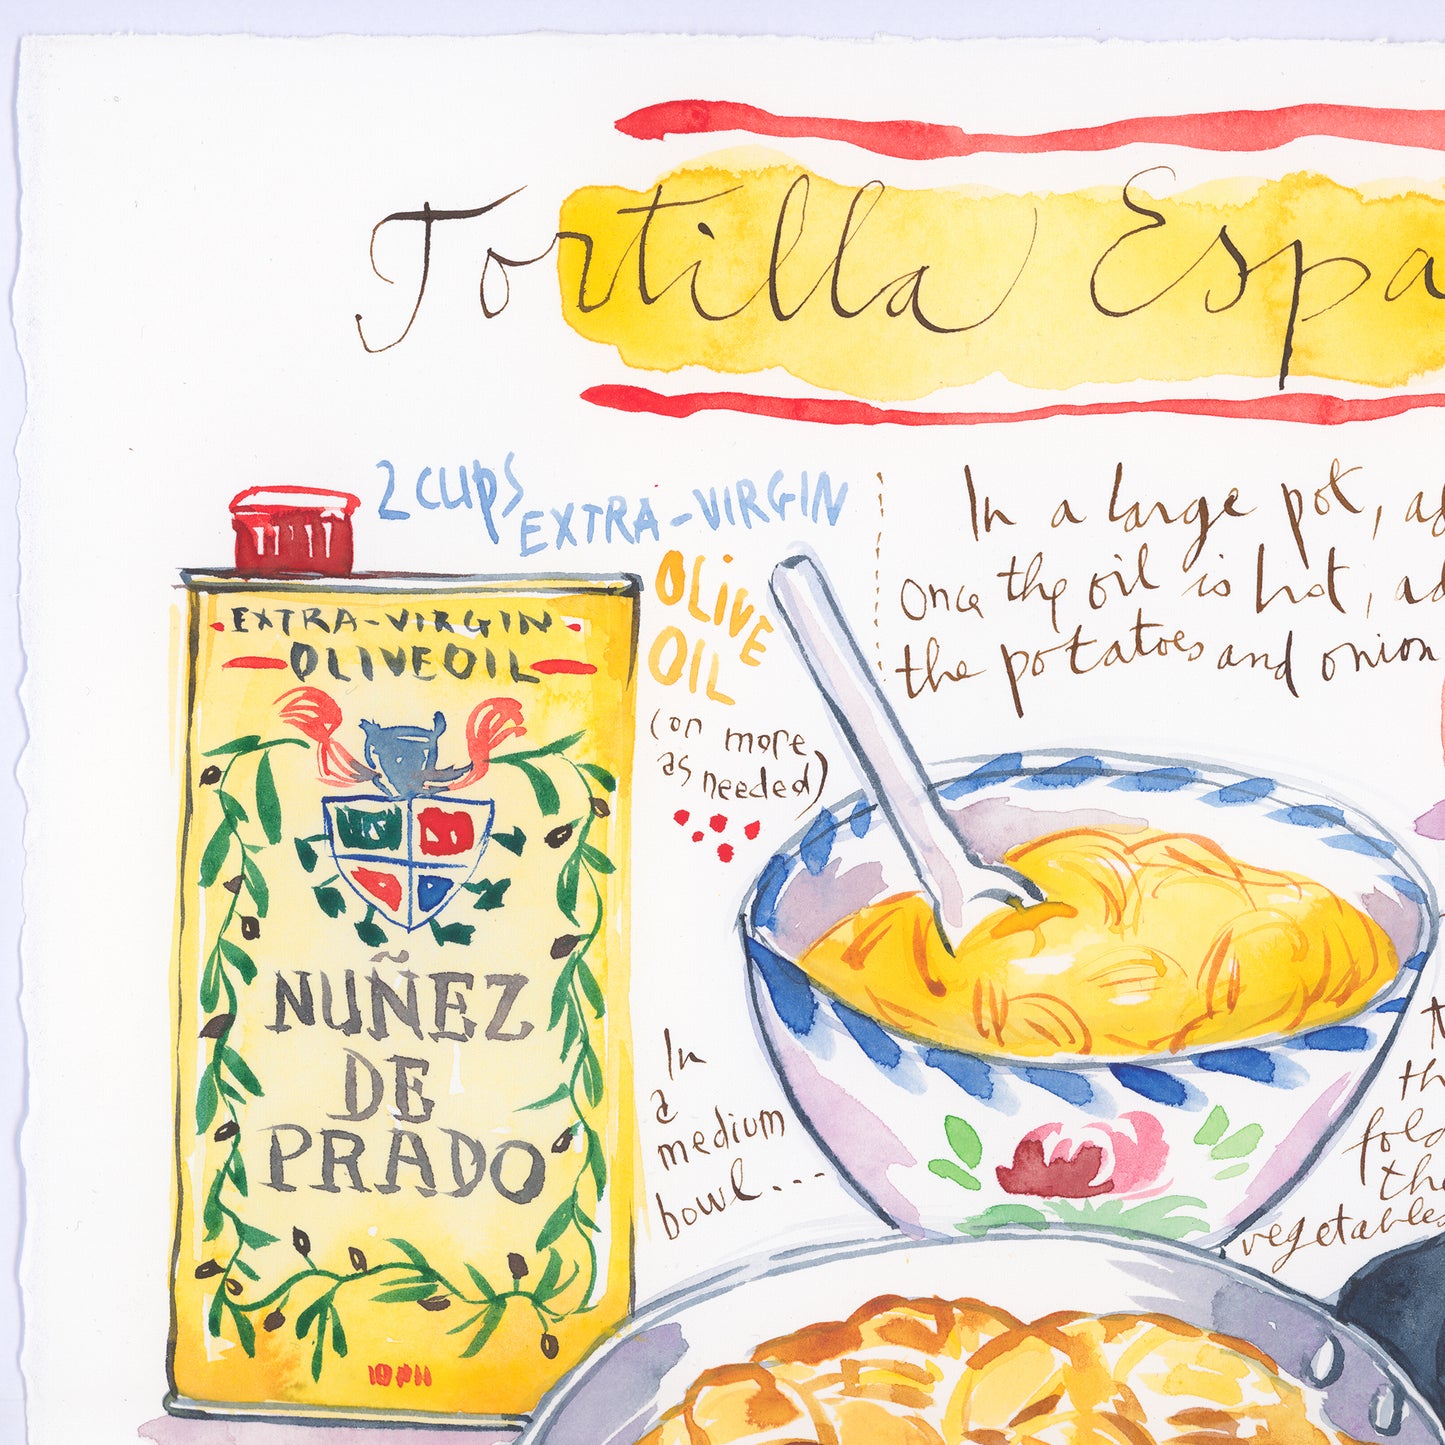 Tortilla Espanola recipe. Original watercolor painting